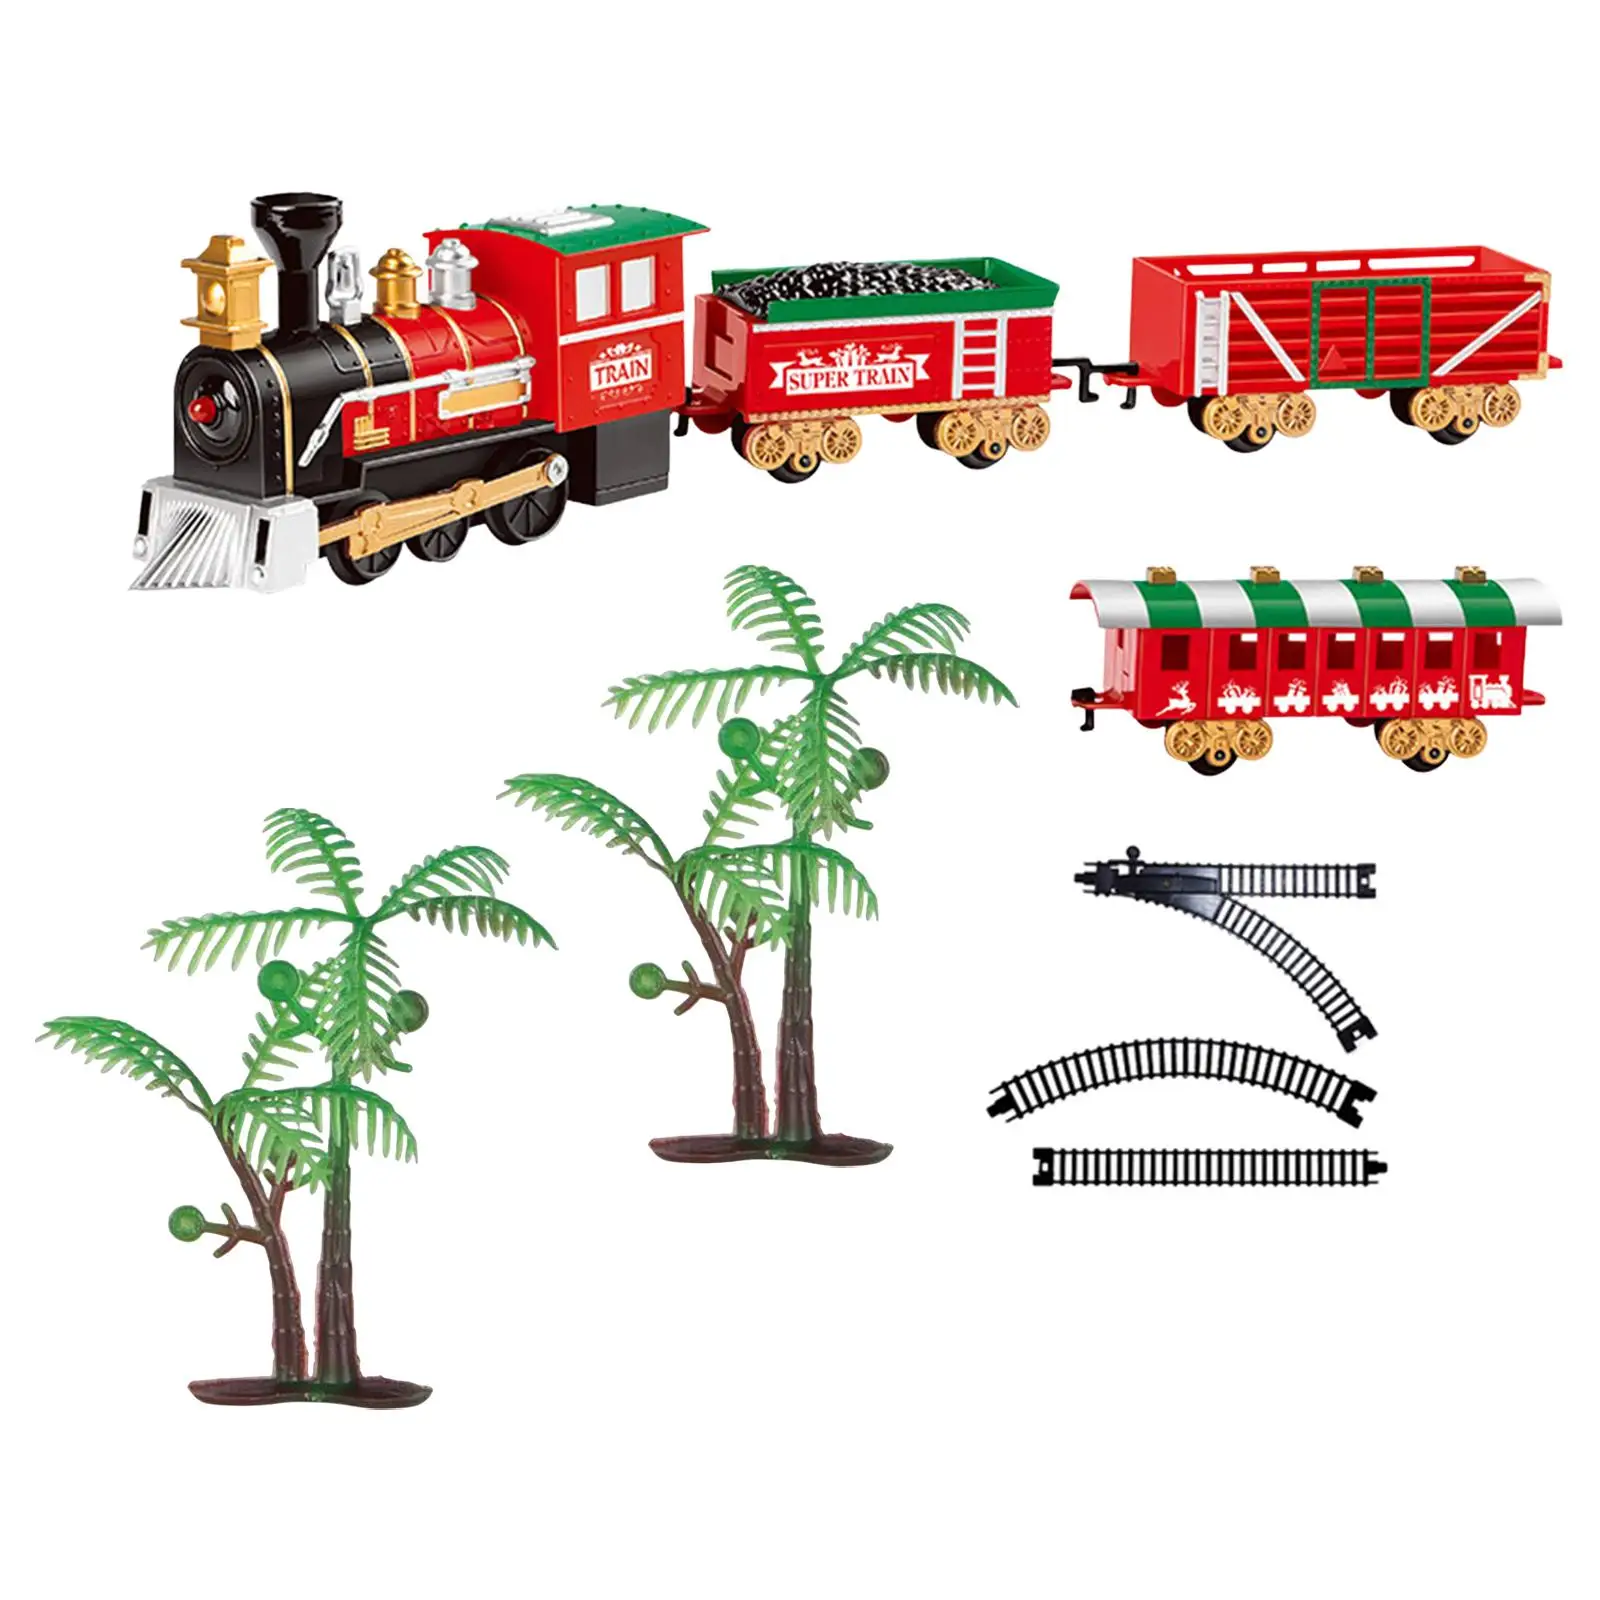 Portable Christmas Train Set Railway Kit Educational Learning Toy Railway Track Set for Kids Children Preschool Toddler